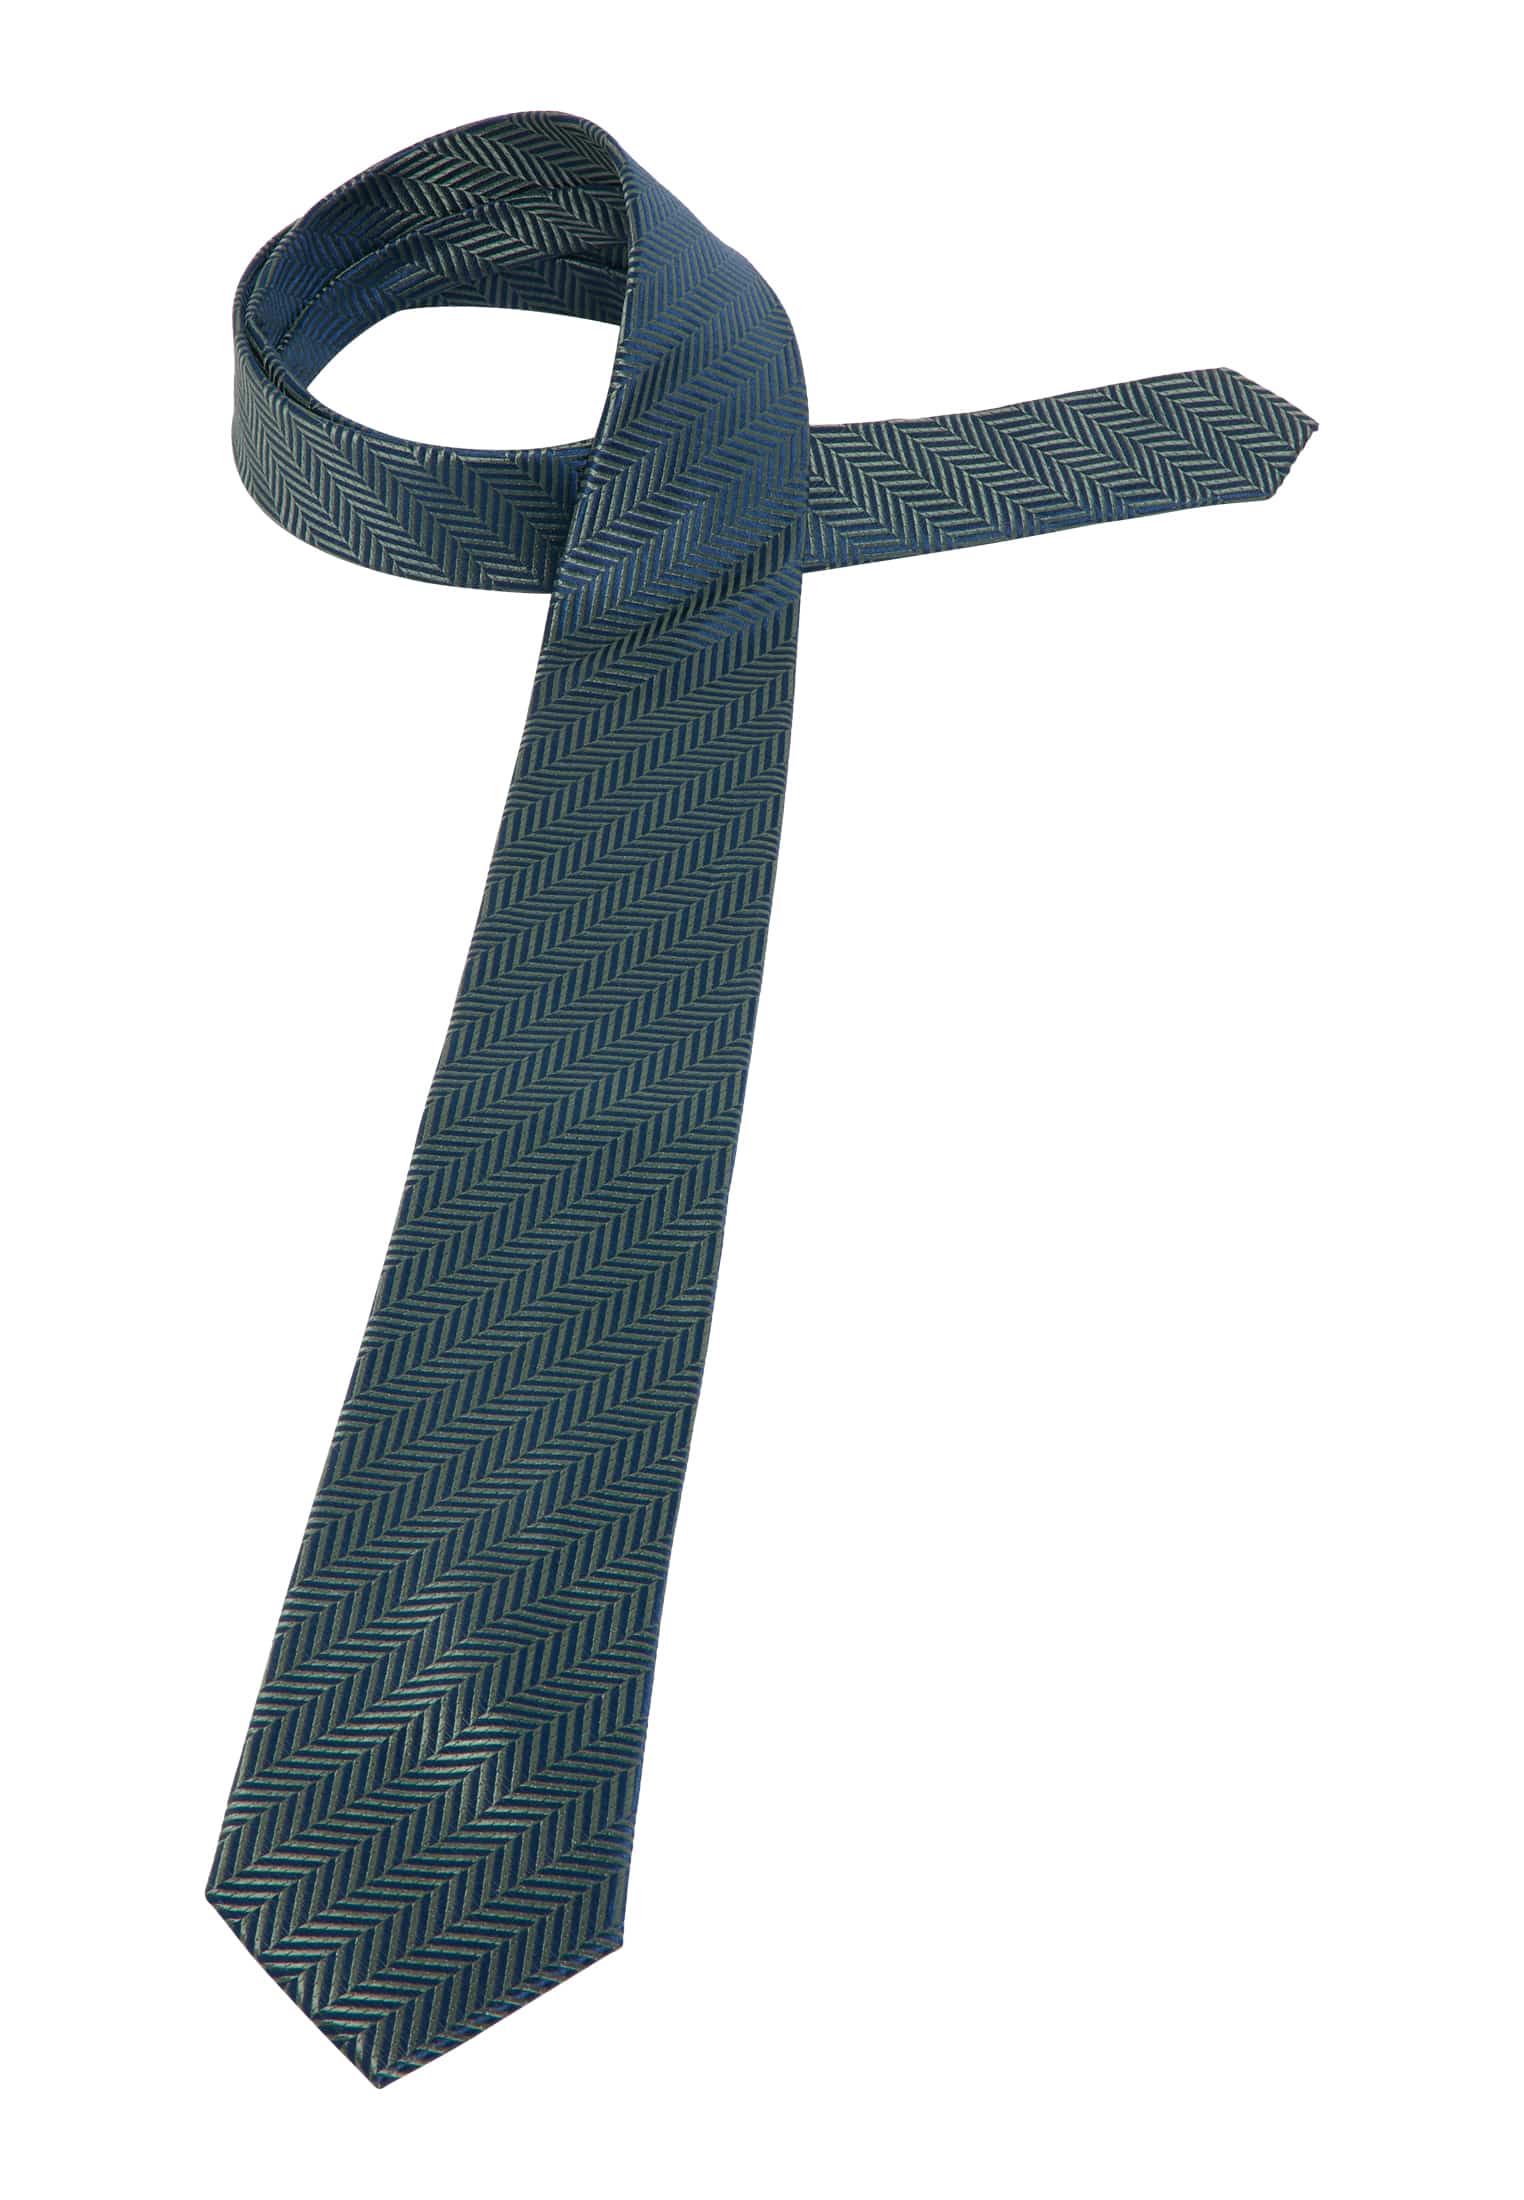 Krawatte in grün gemustert | grün | 142 | 1AC01911-04-01-142